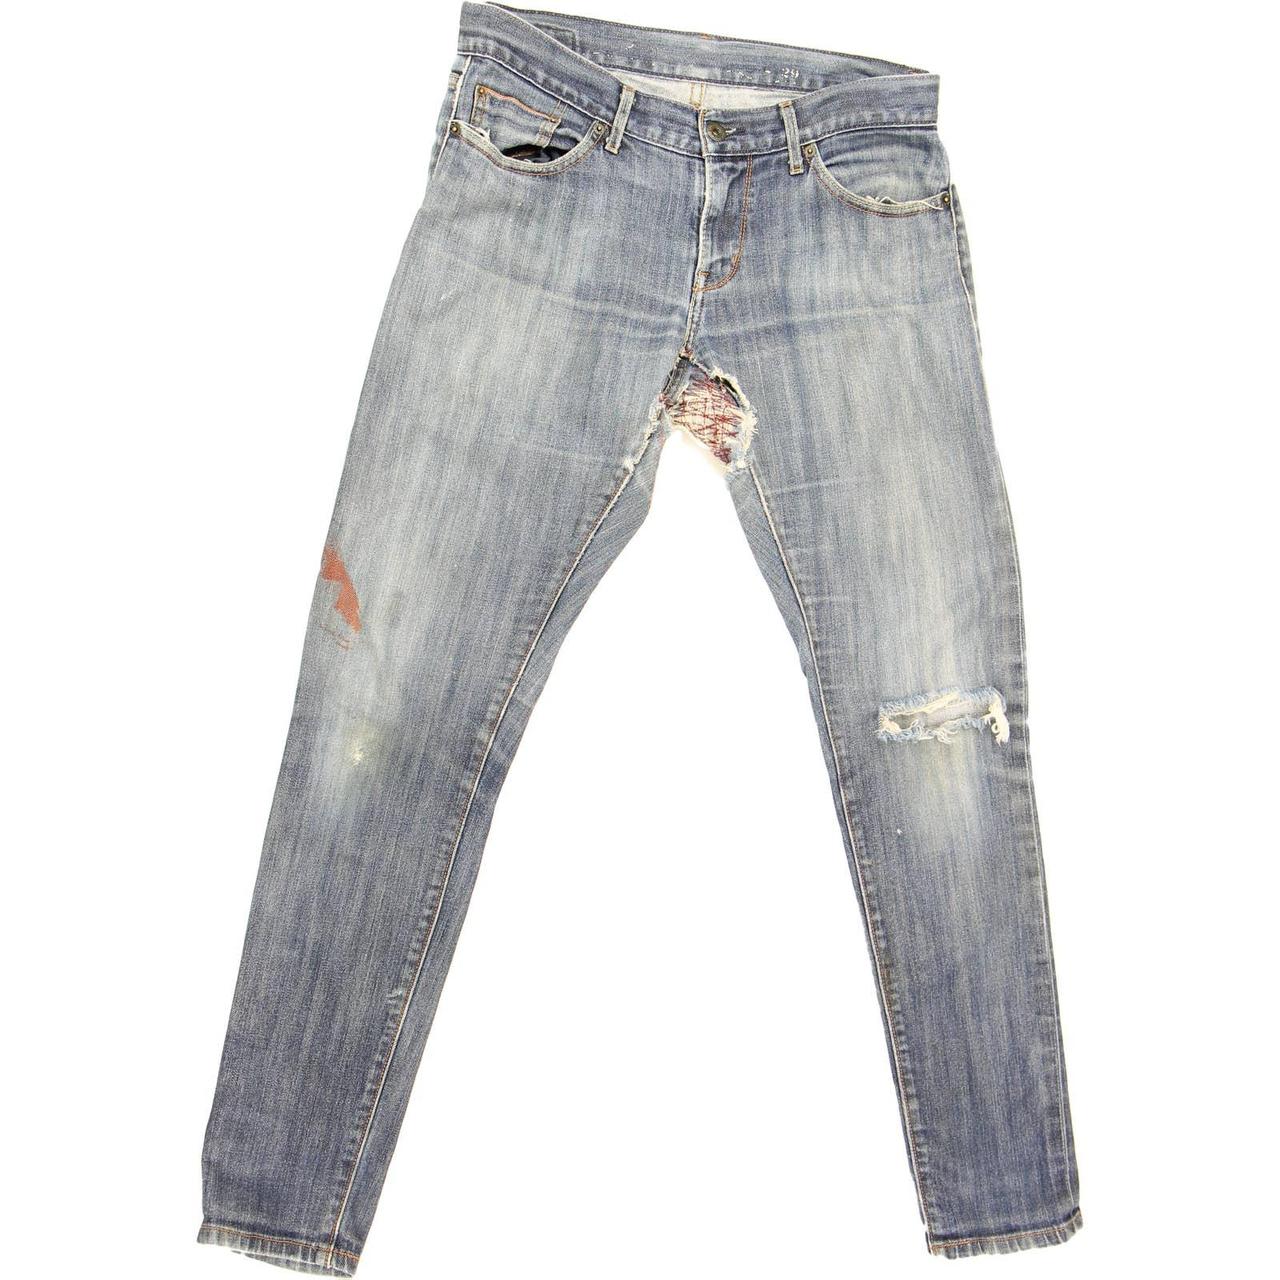 Levi's Trashed Worn Skinny Jeans 32 X... - Depop